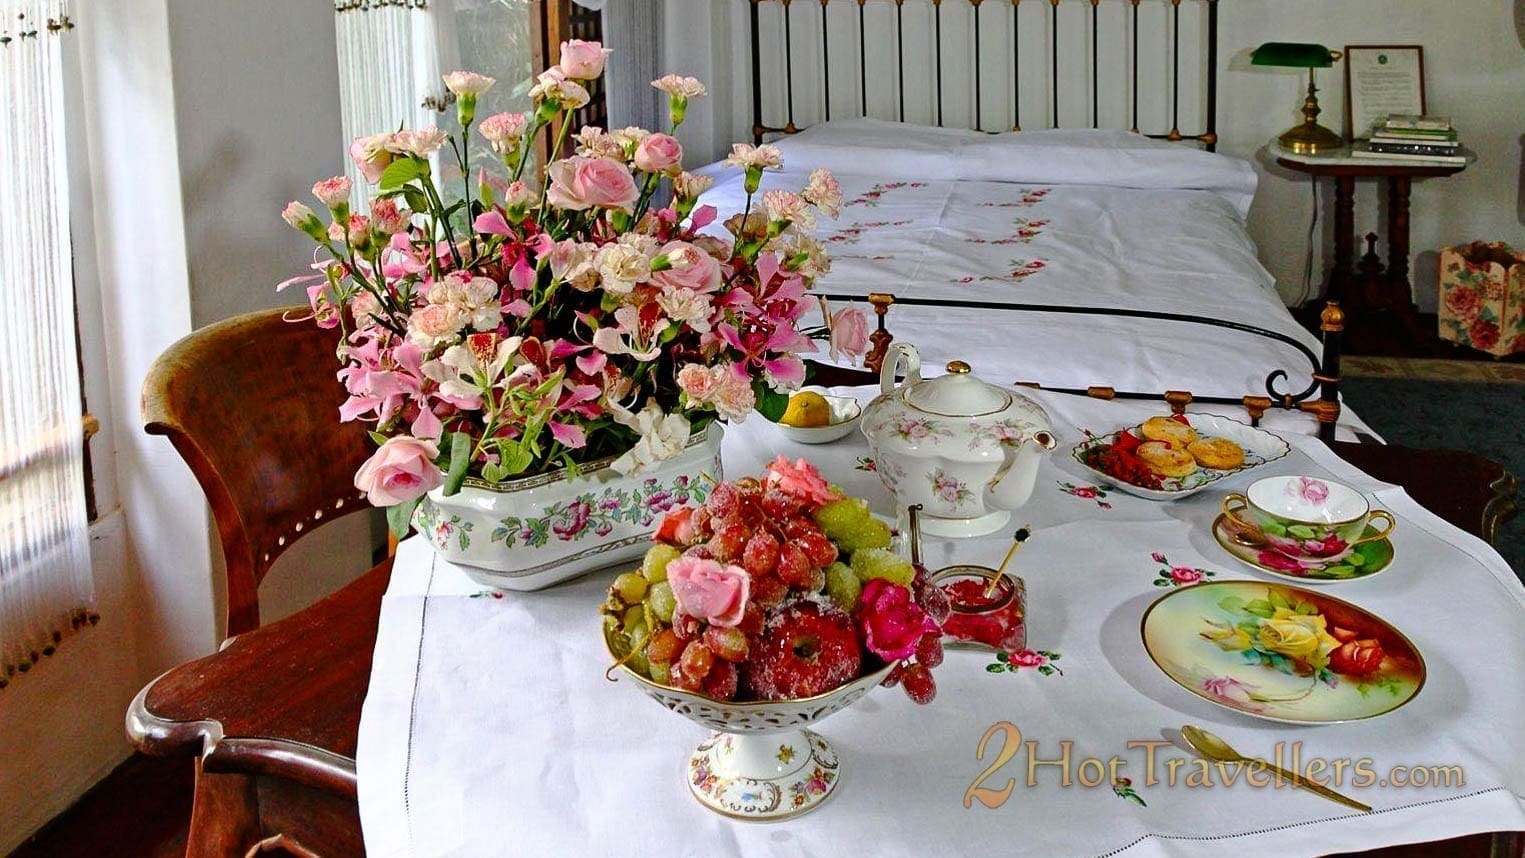 Sonya's garden table setting